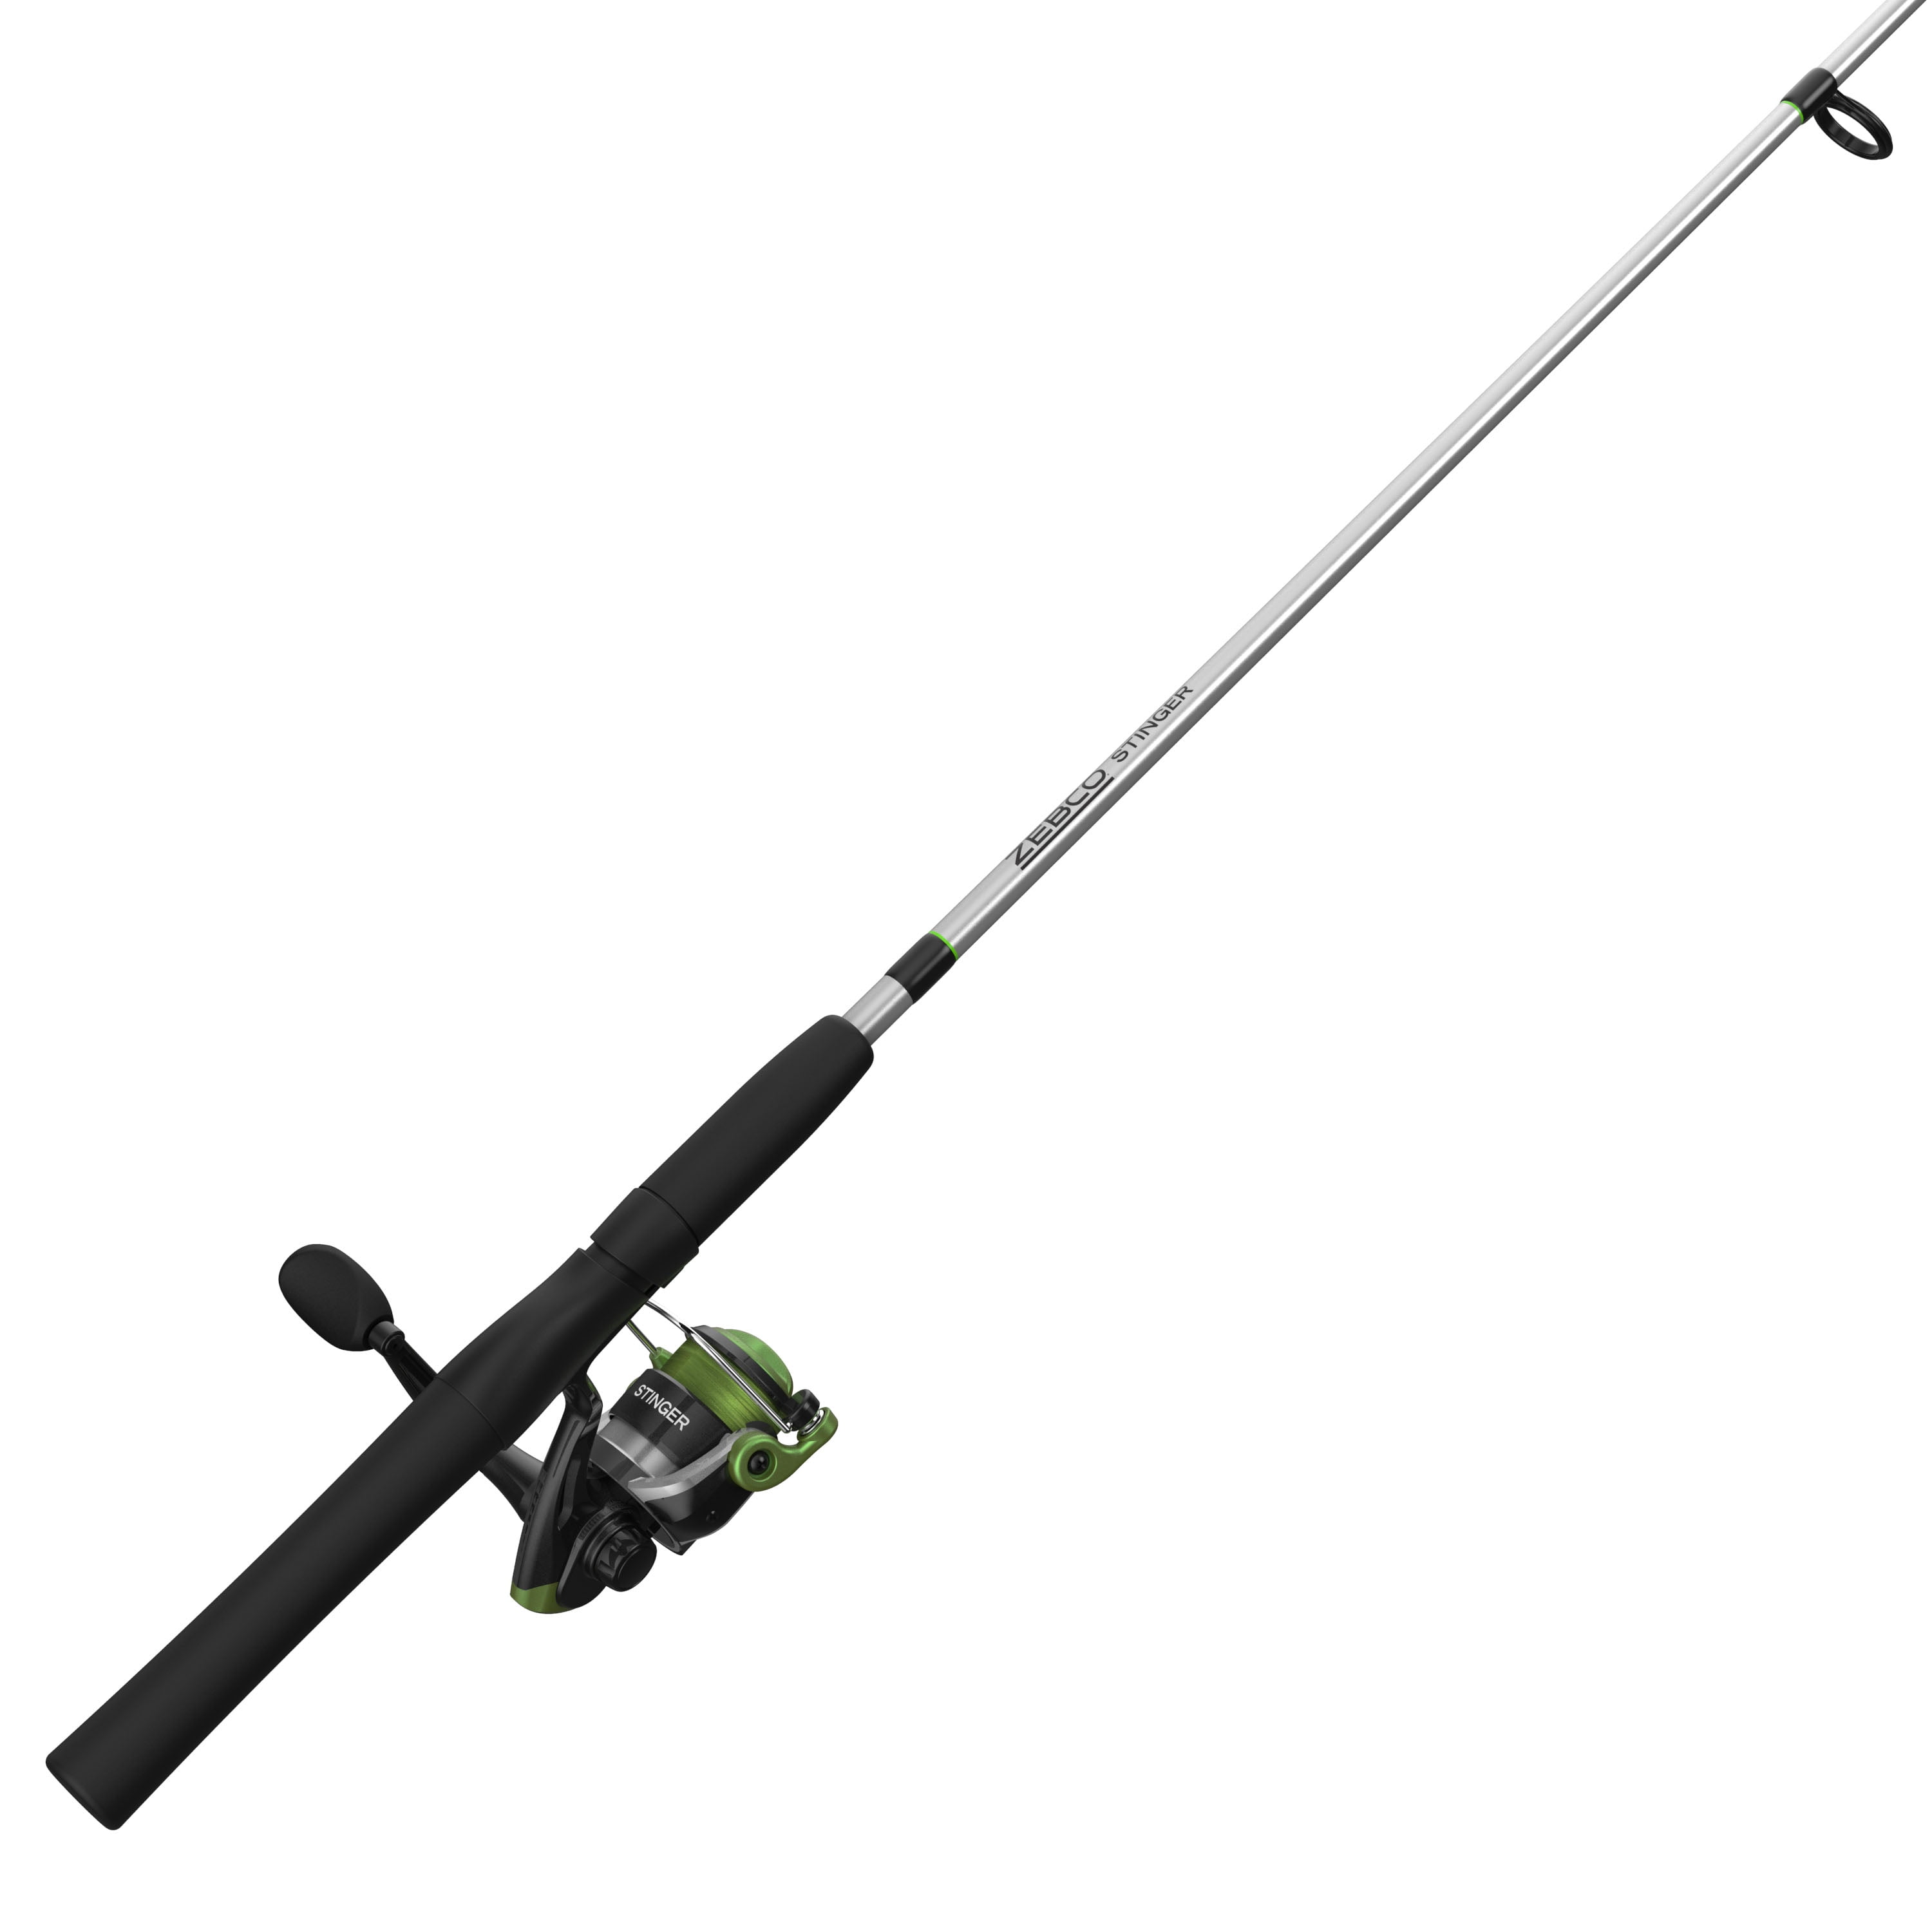  Zebco 404 Spincast Fishing Reel, Size 40 Reel